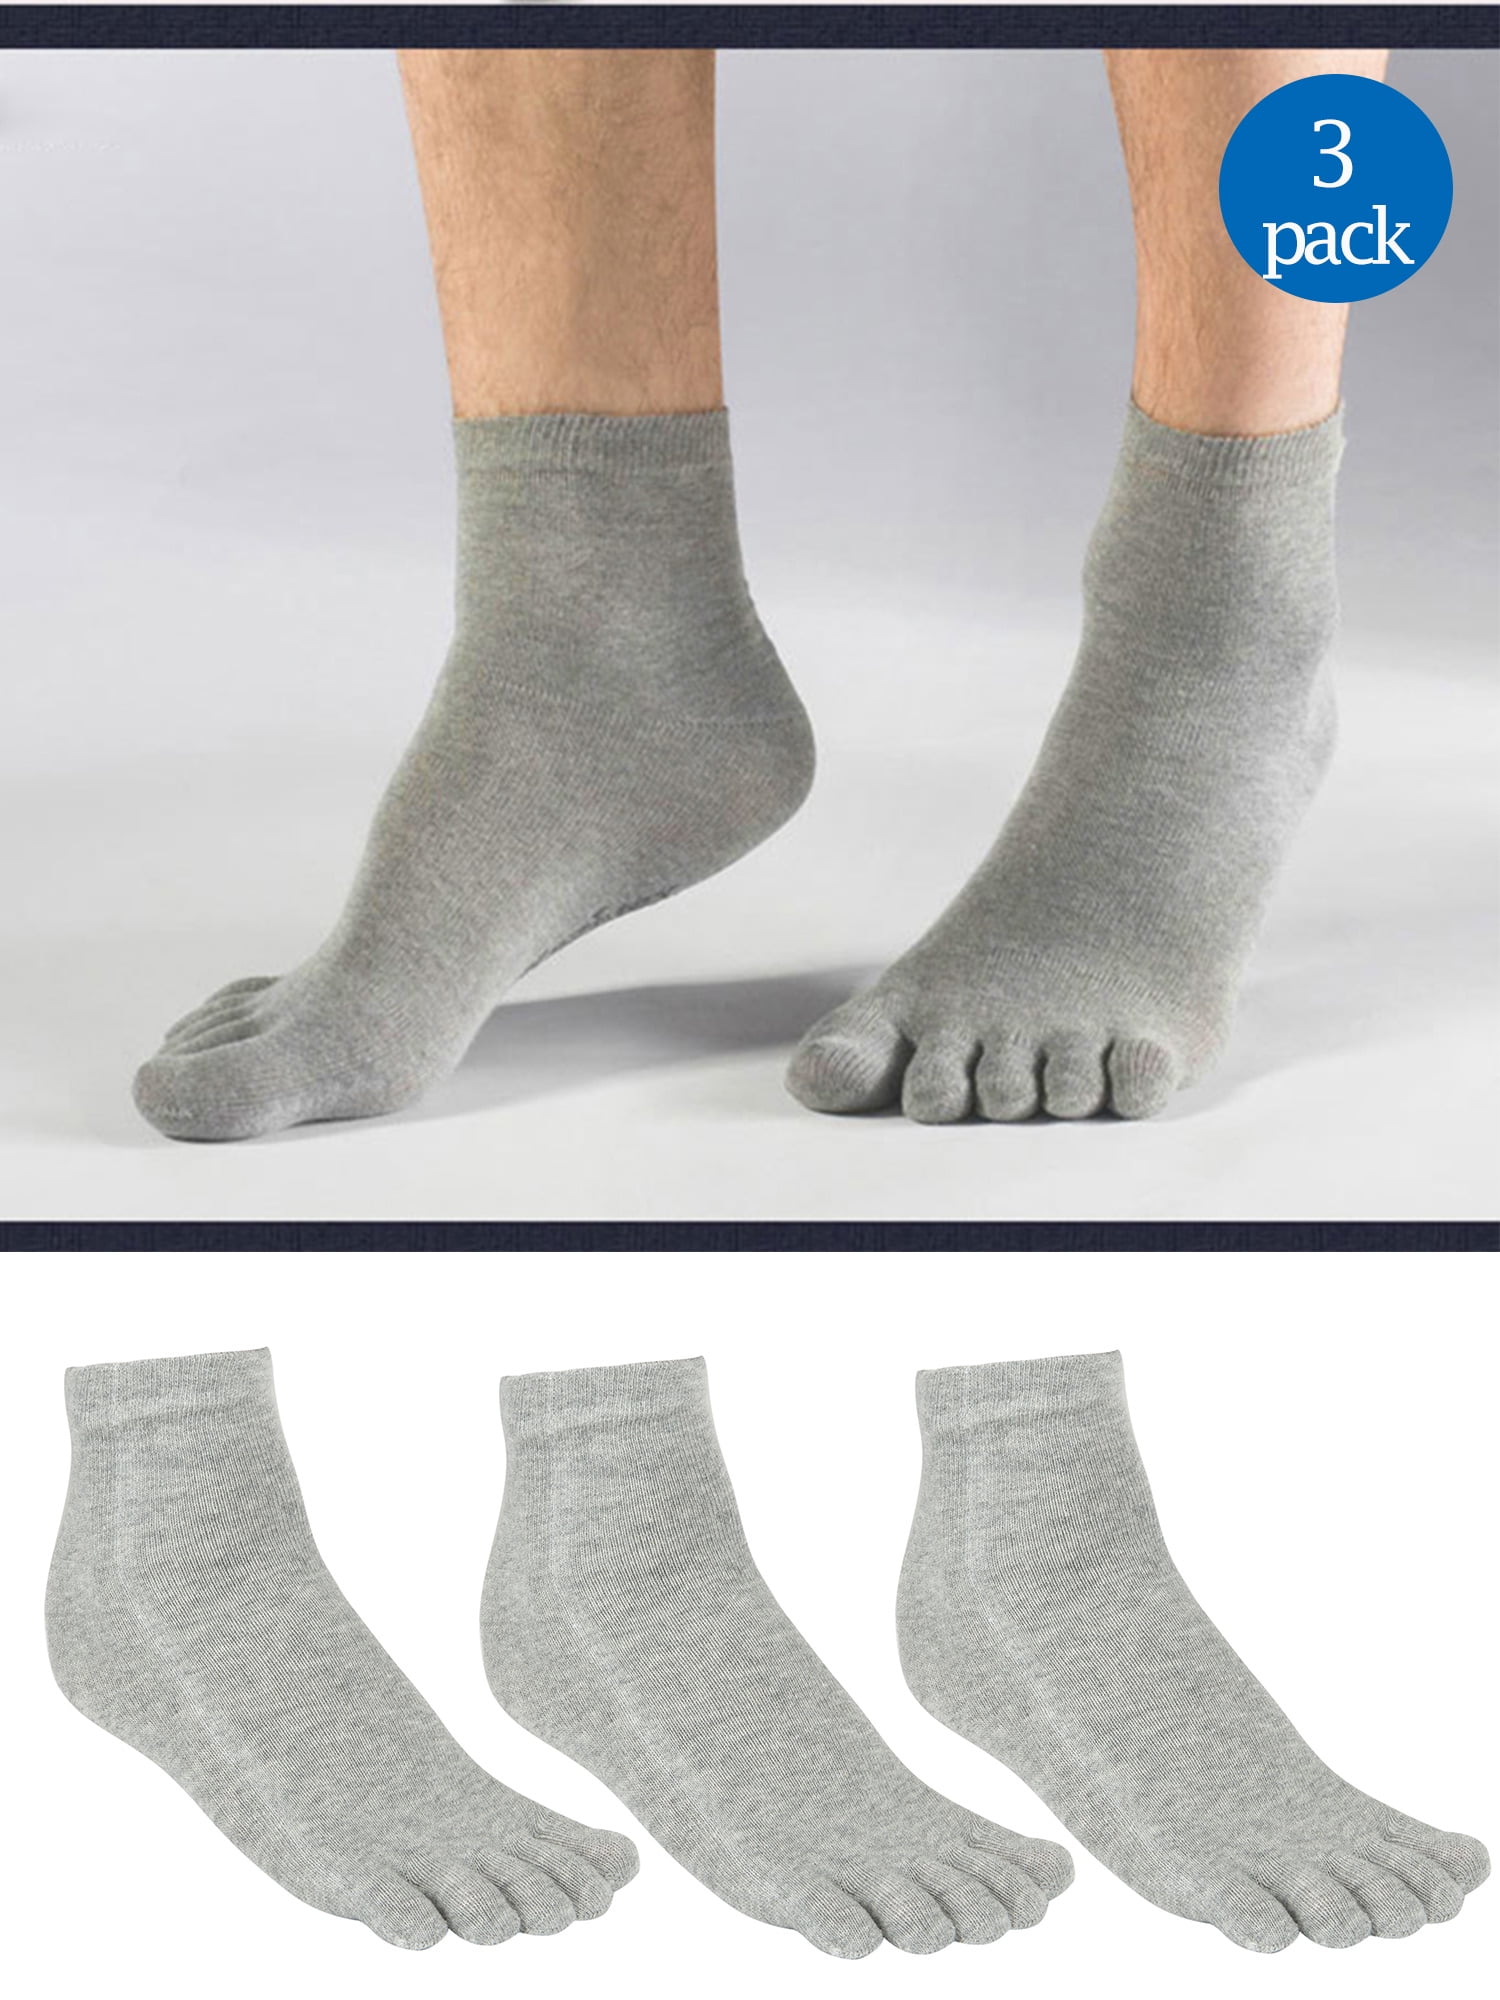 Walmart Sock Size Chart